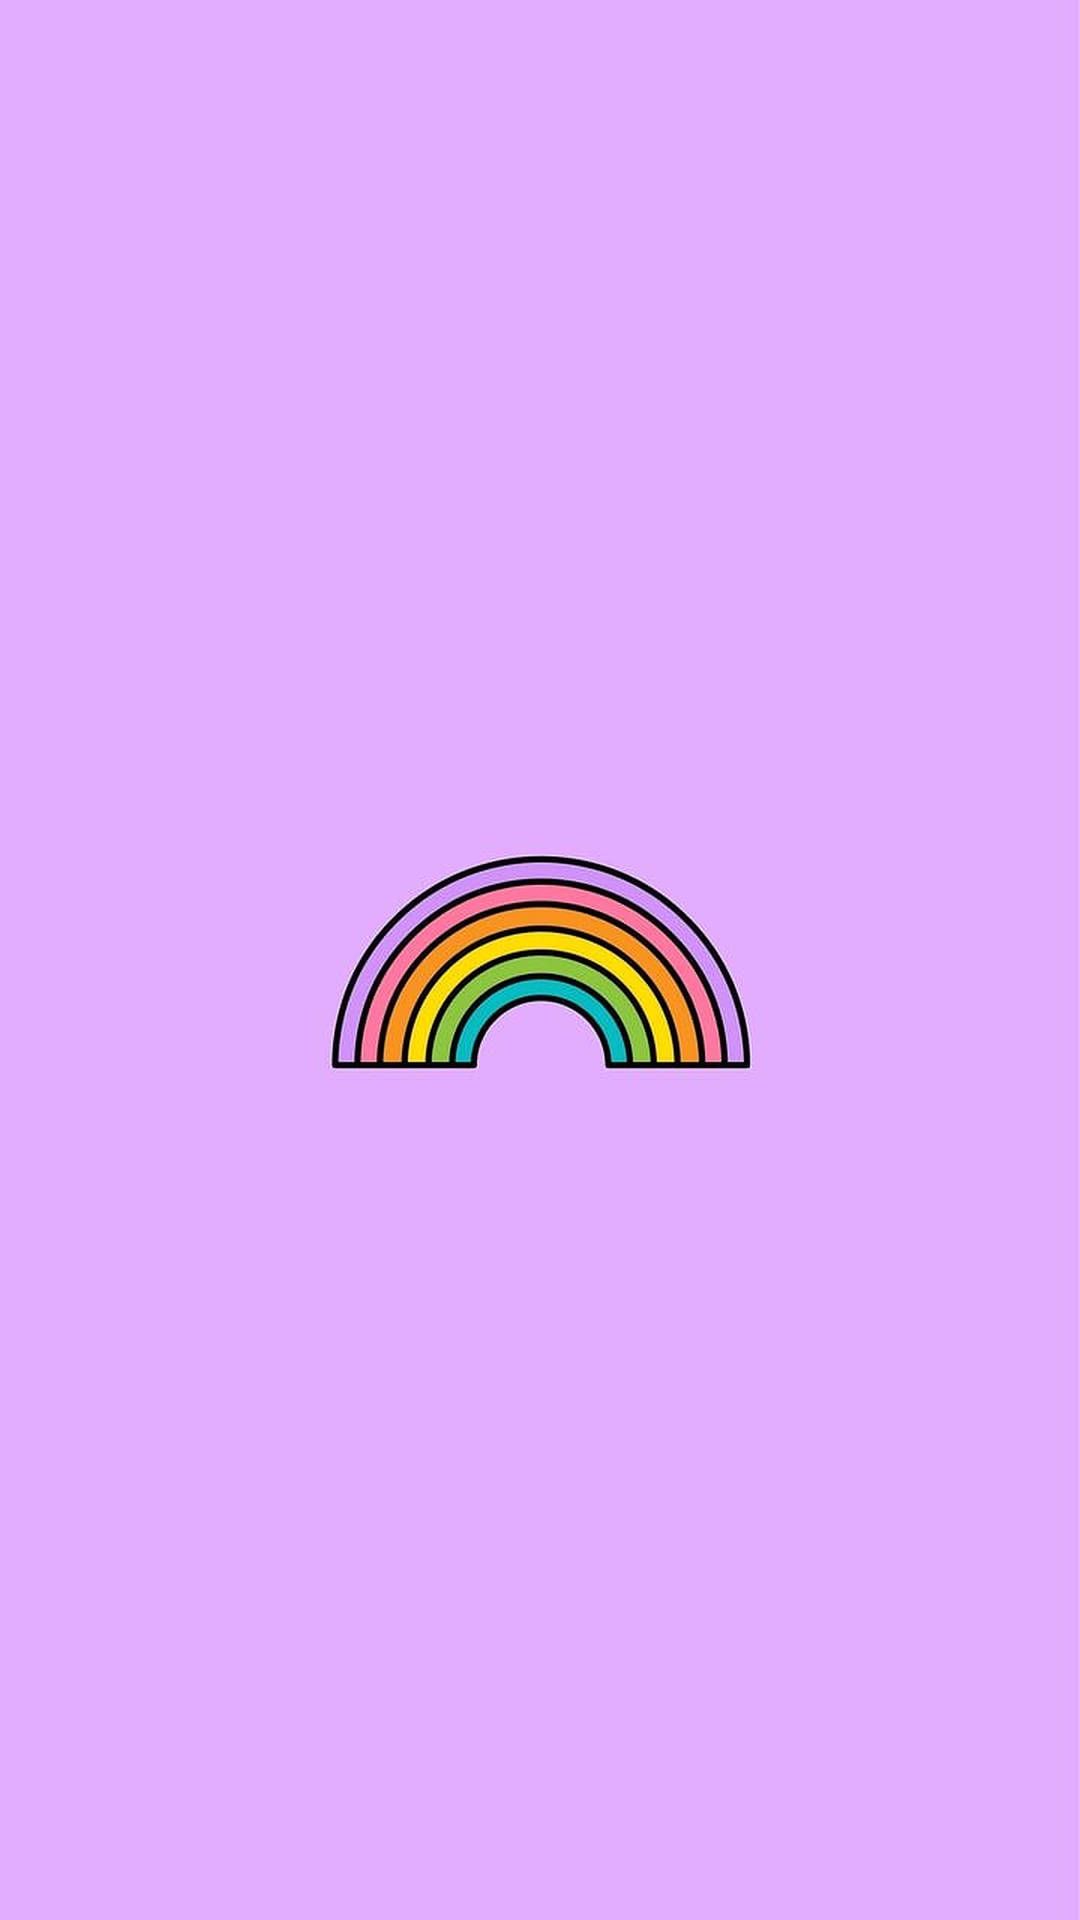 A cute rainbow wallpaper for phone - Pastel rainbow